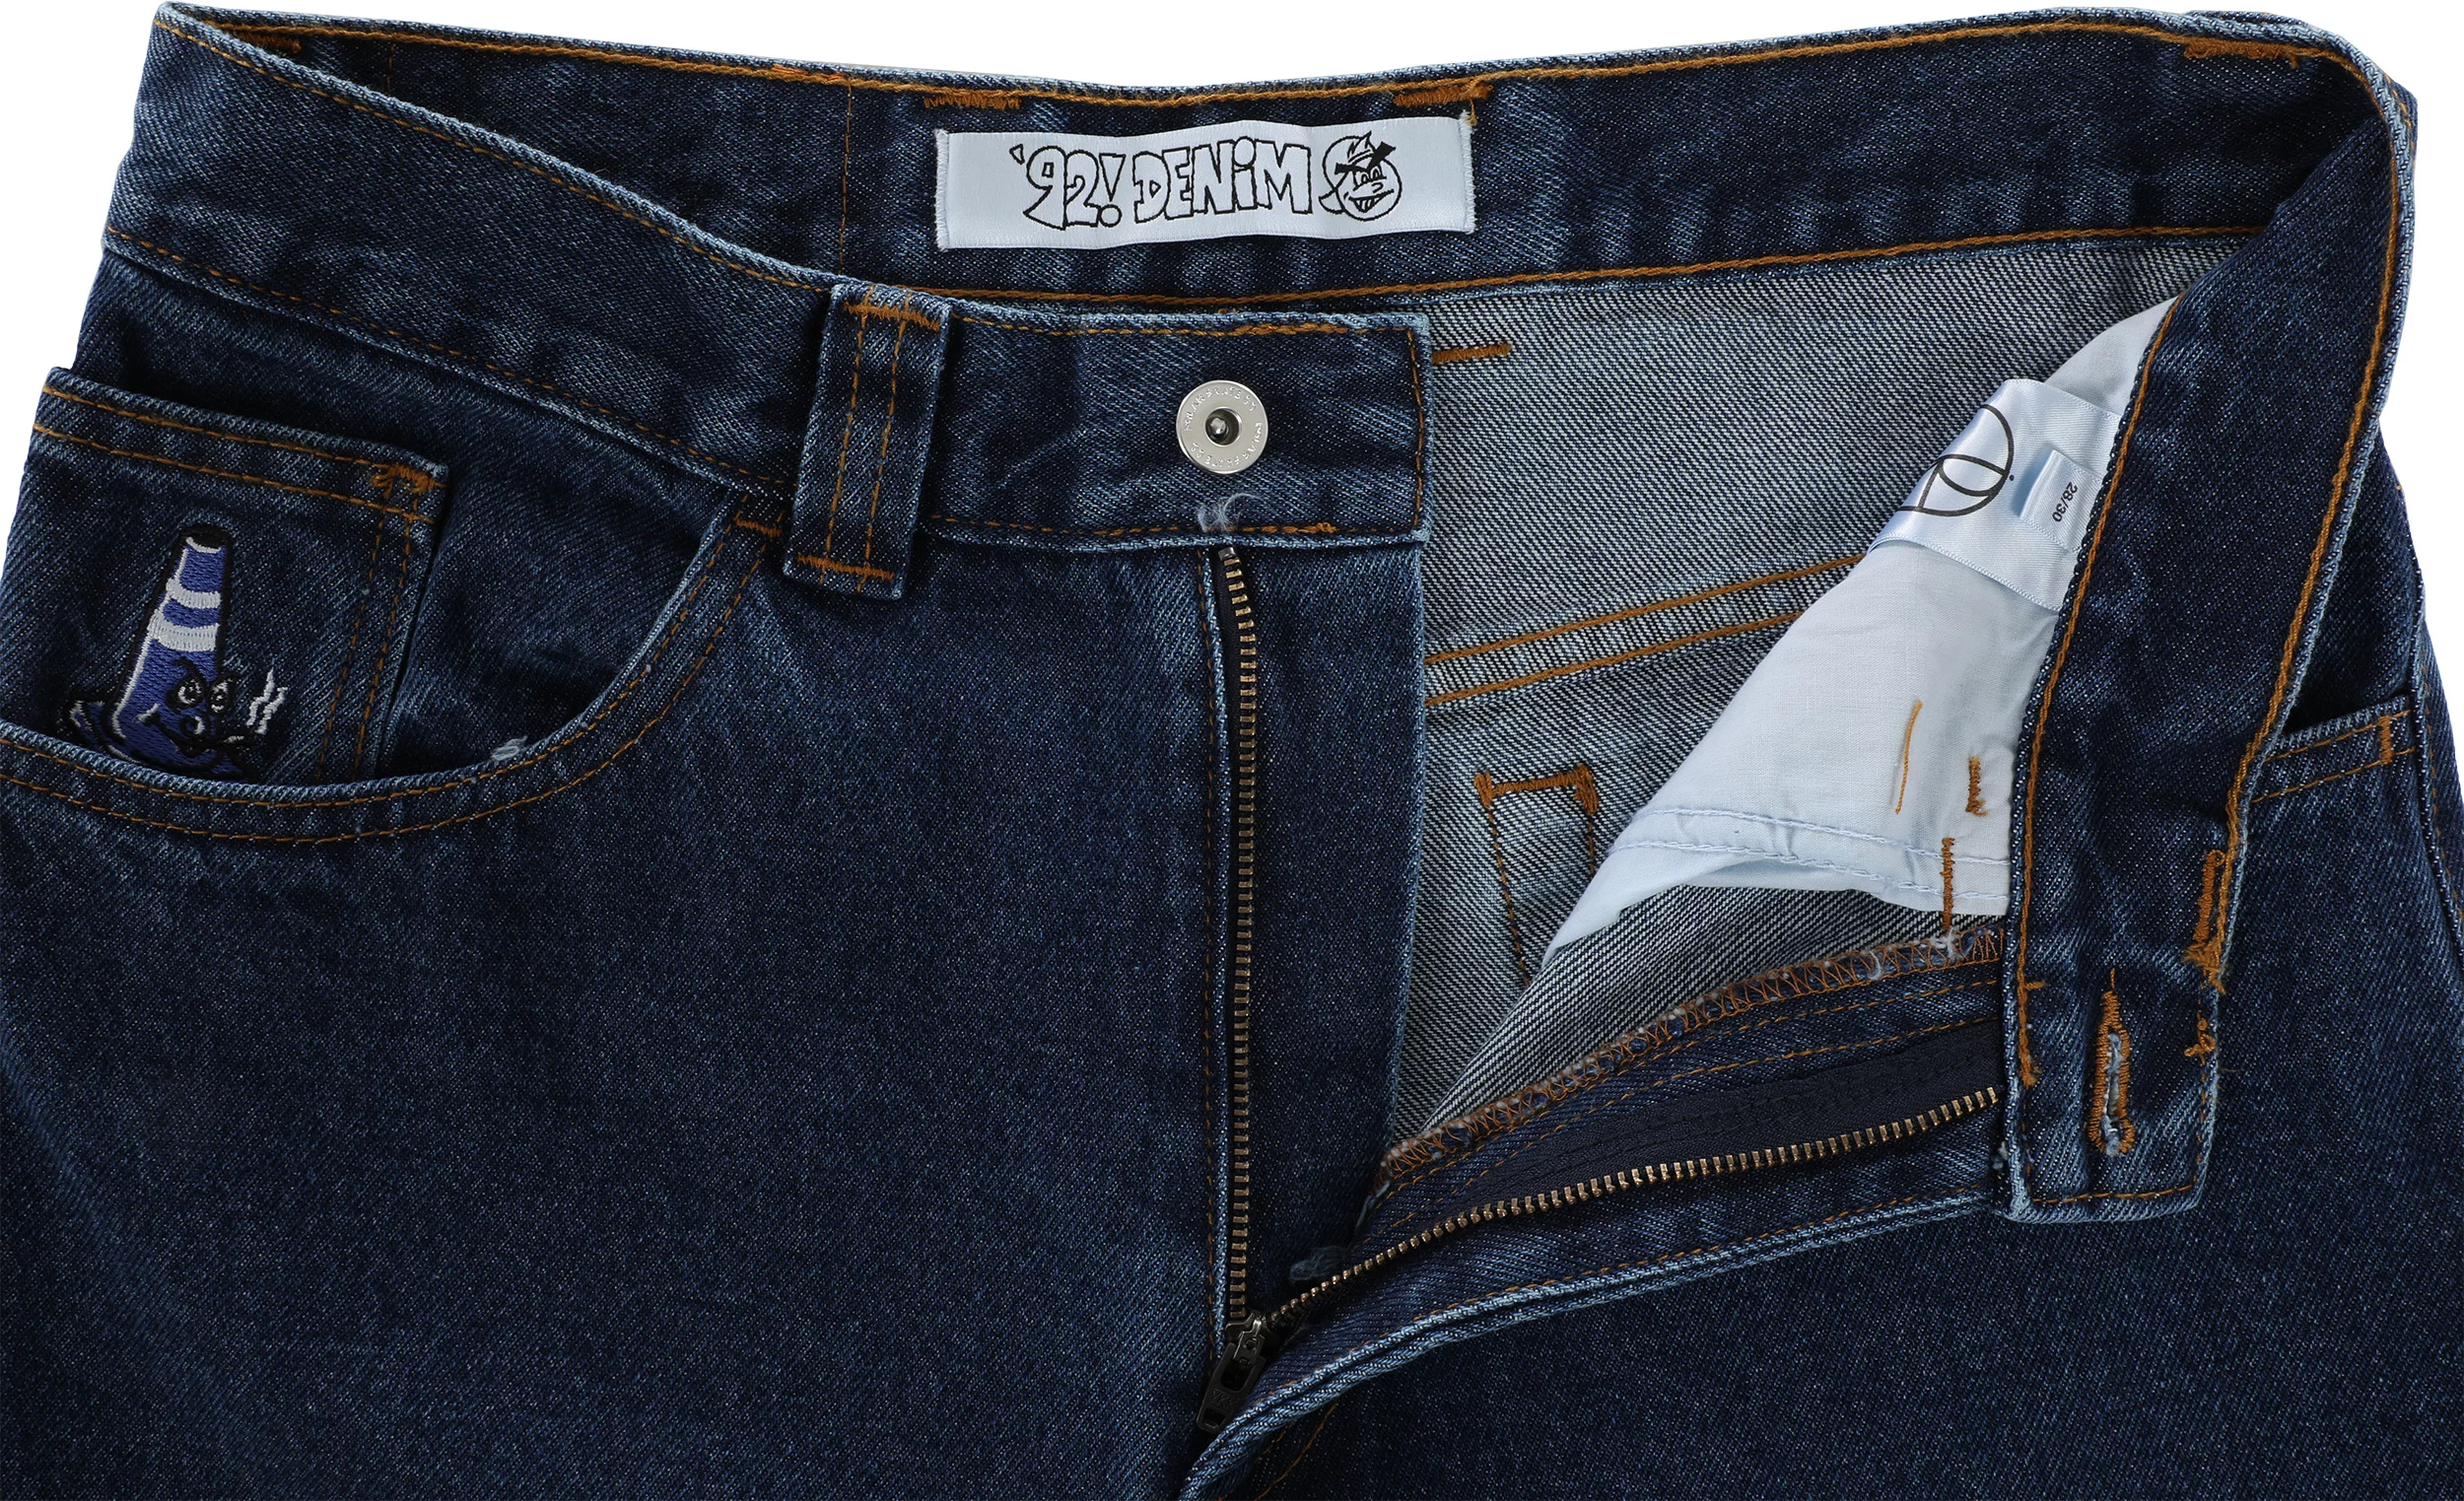 Polar Skate Co. '92! Denim Jeans - dark blue - Free Shipping | Tactics